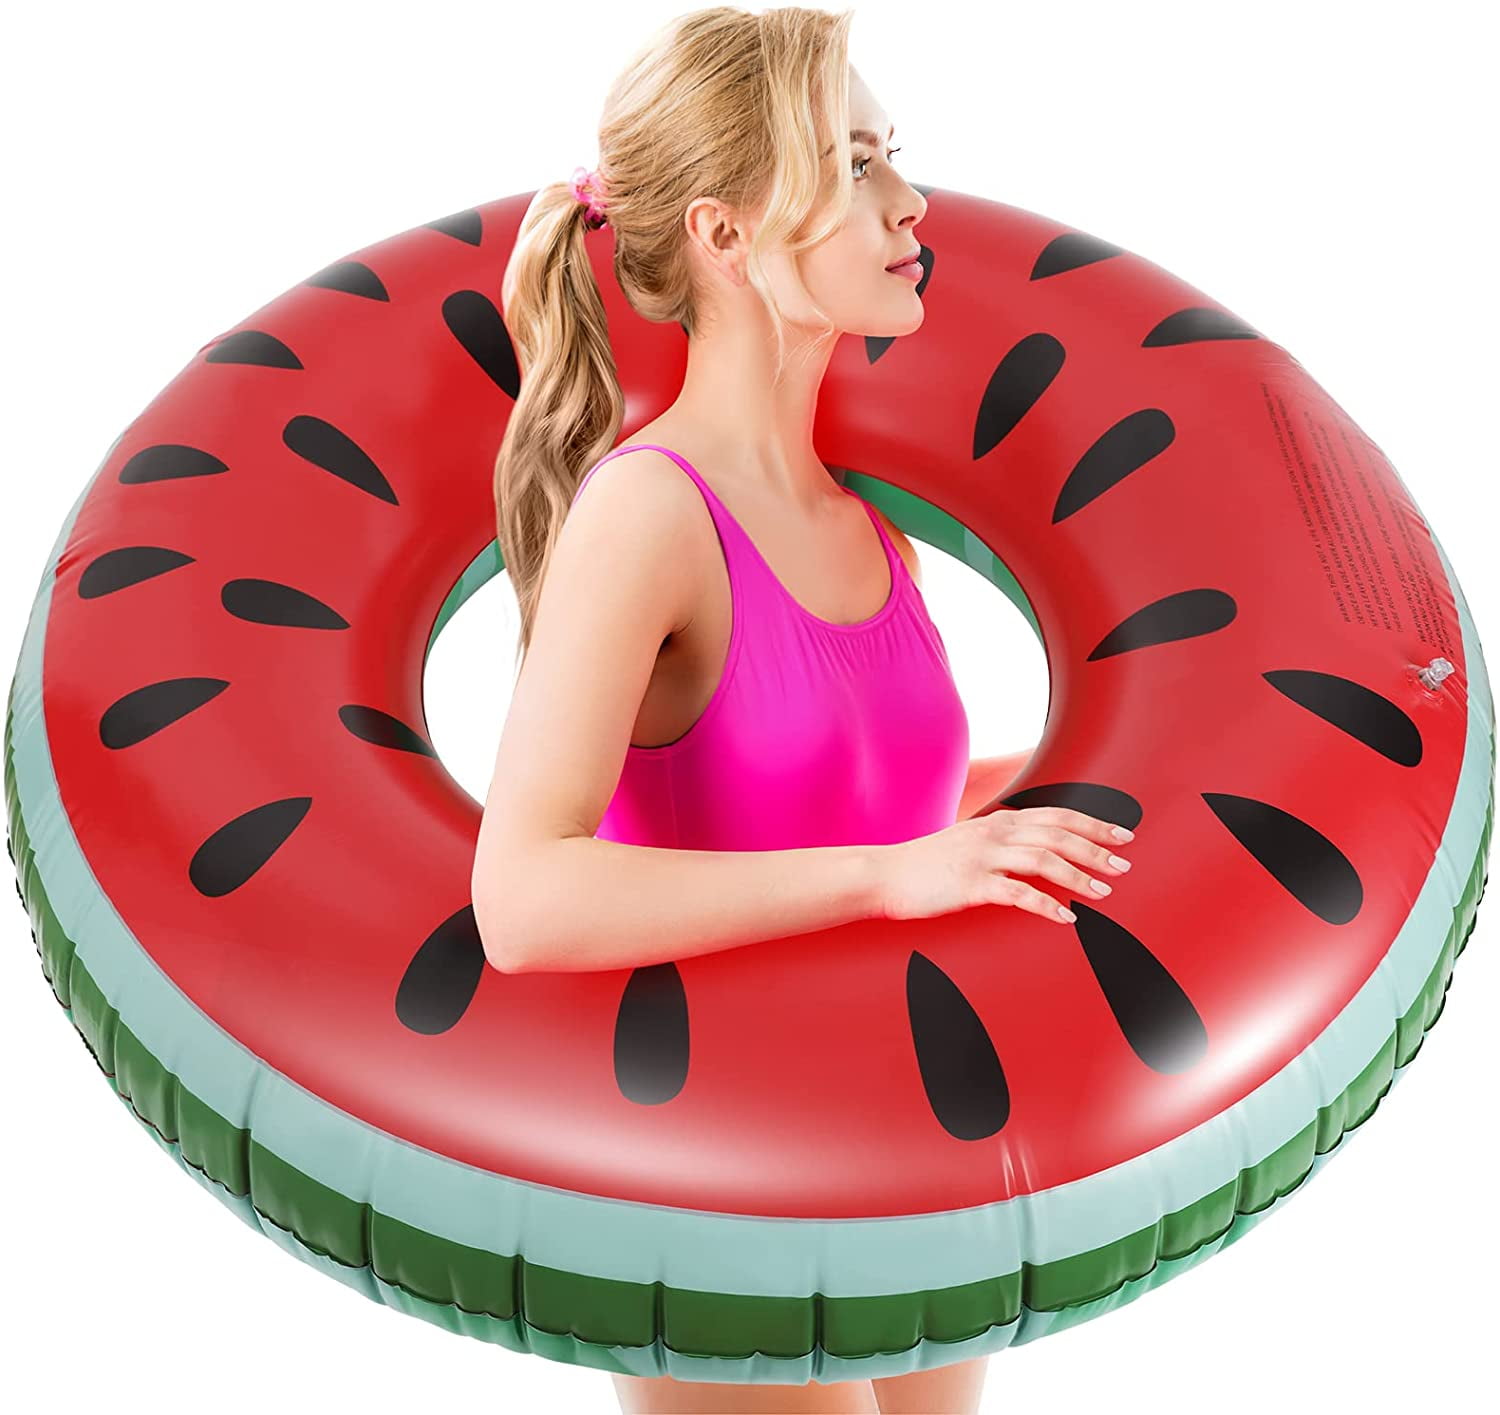 HeySplash Inflatable Pool Float, Watermelon Shaped Summer Pool